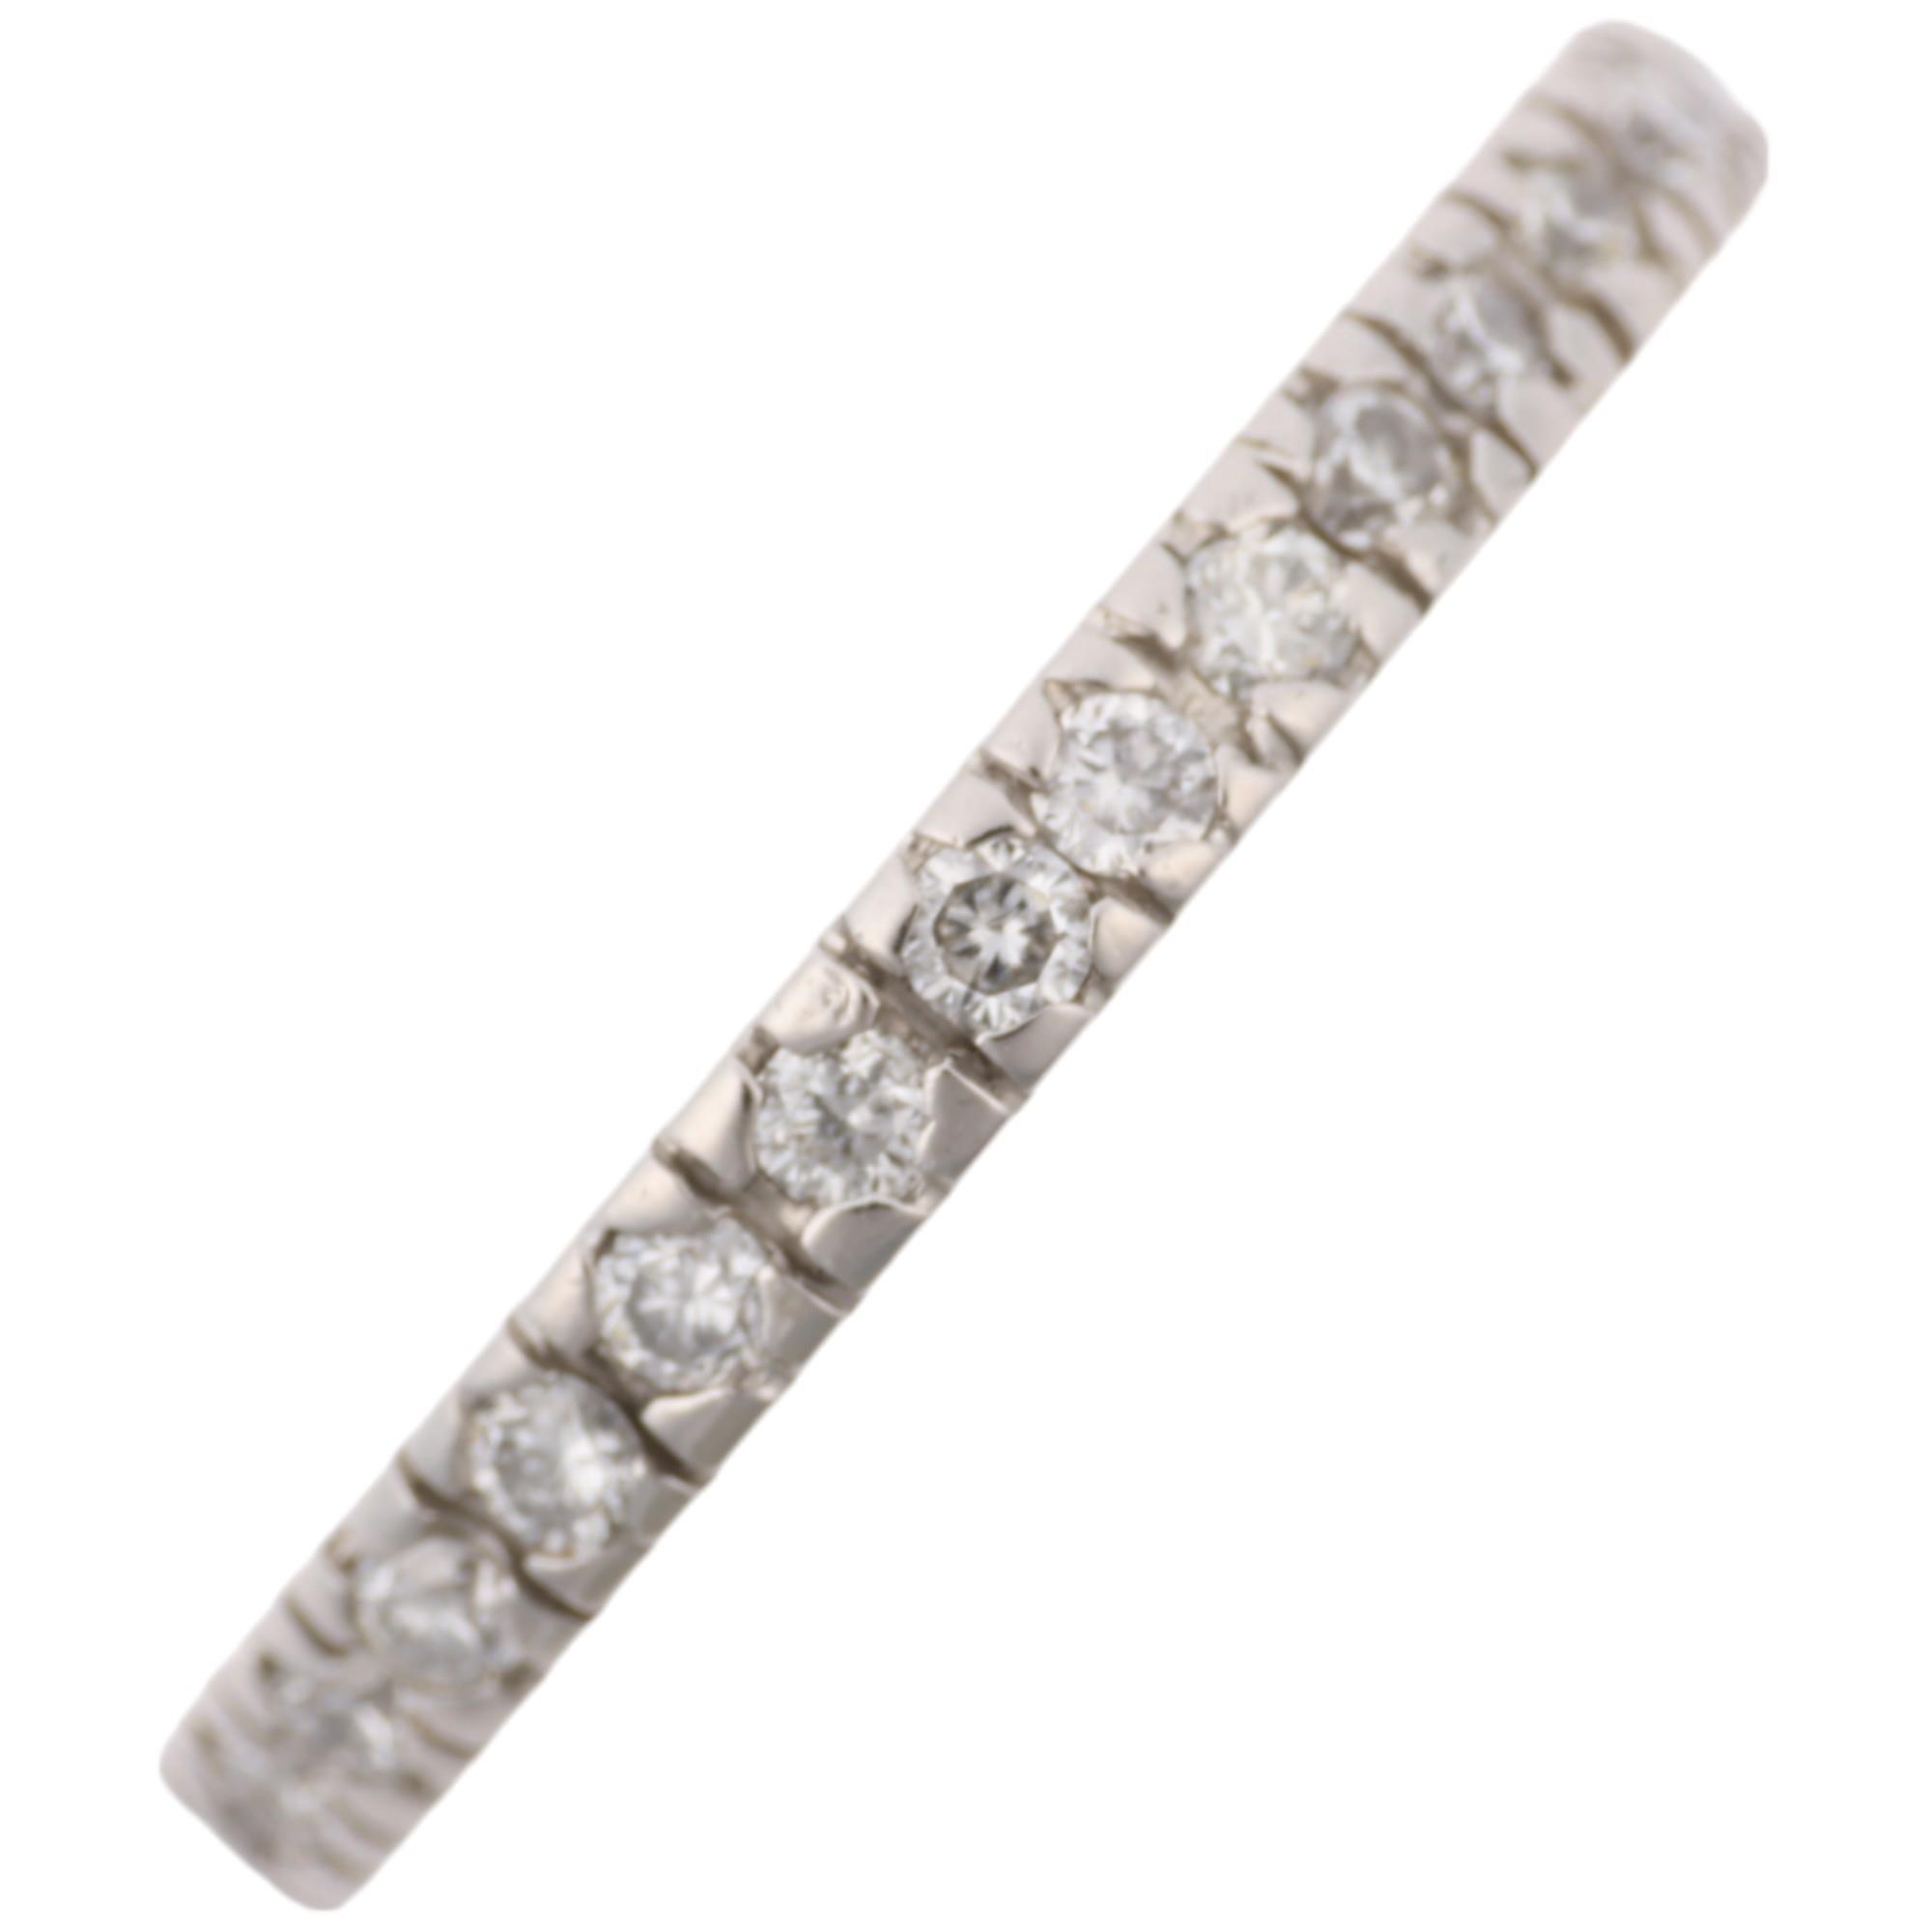 A modern platinum diamond full eternity ring, set with modern round brilliant-cut diamonds, total